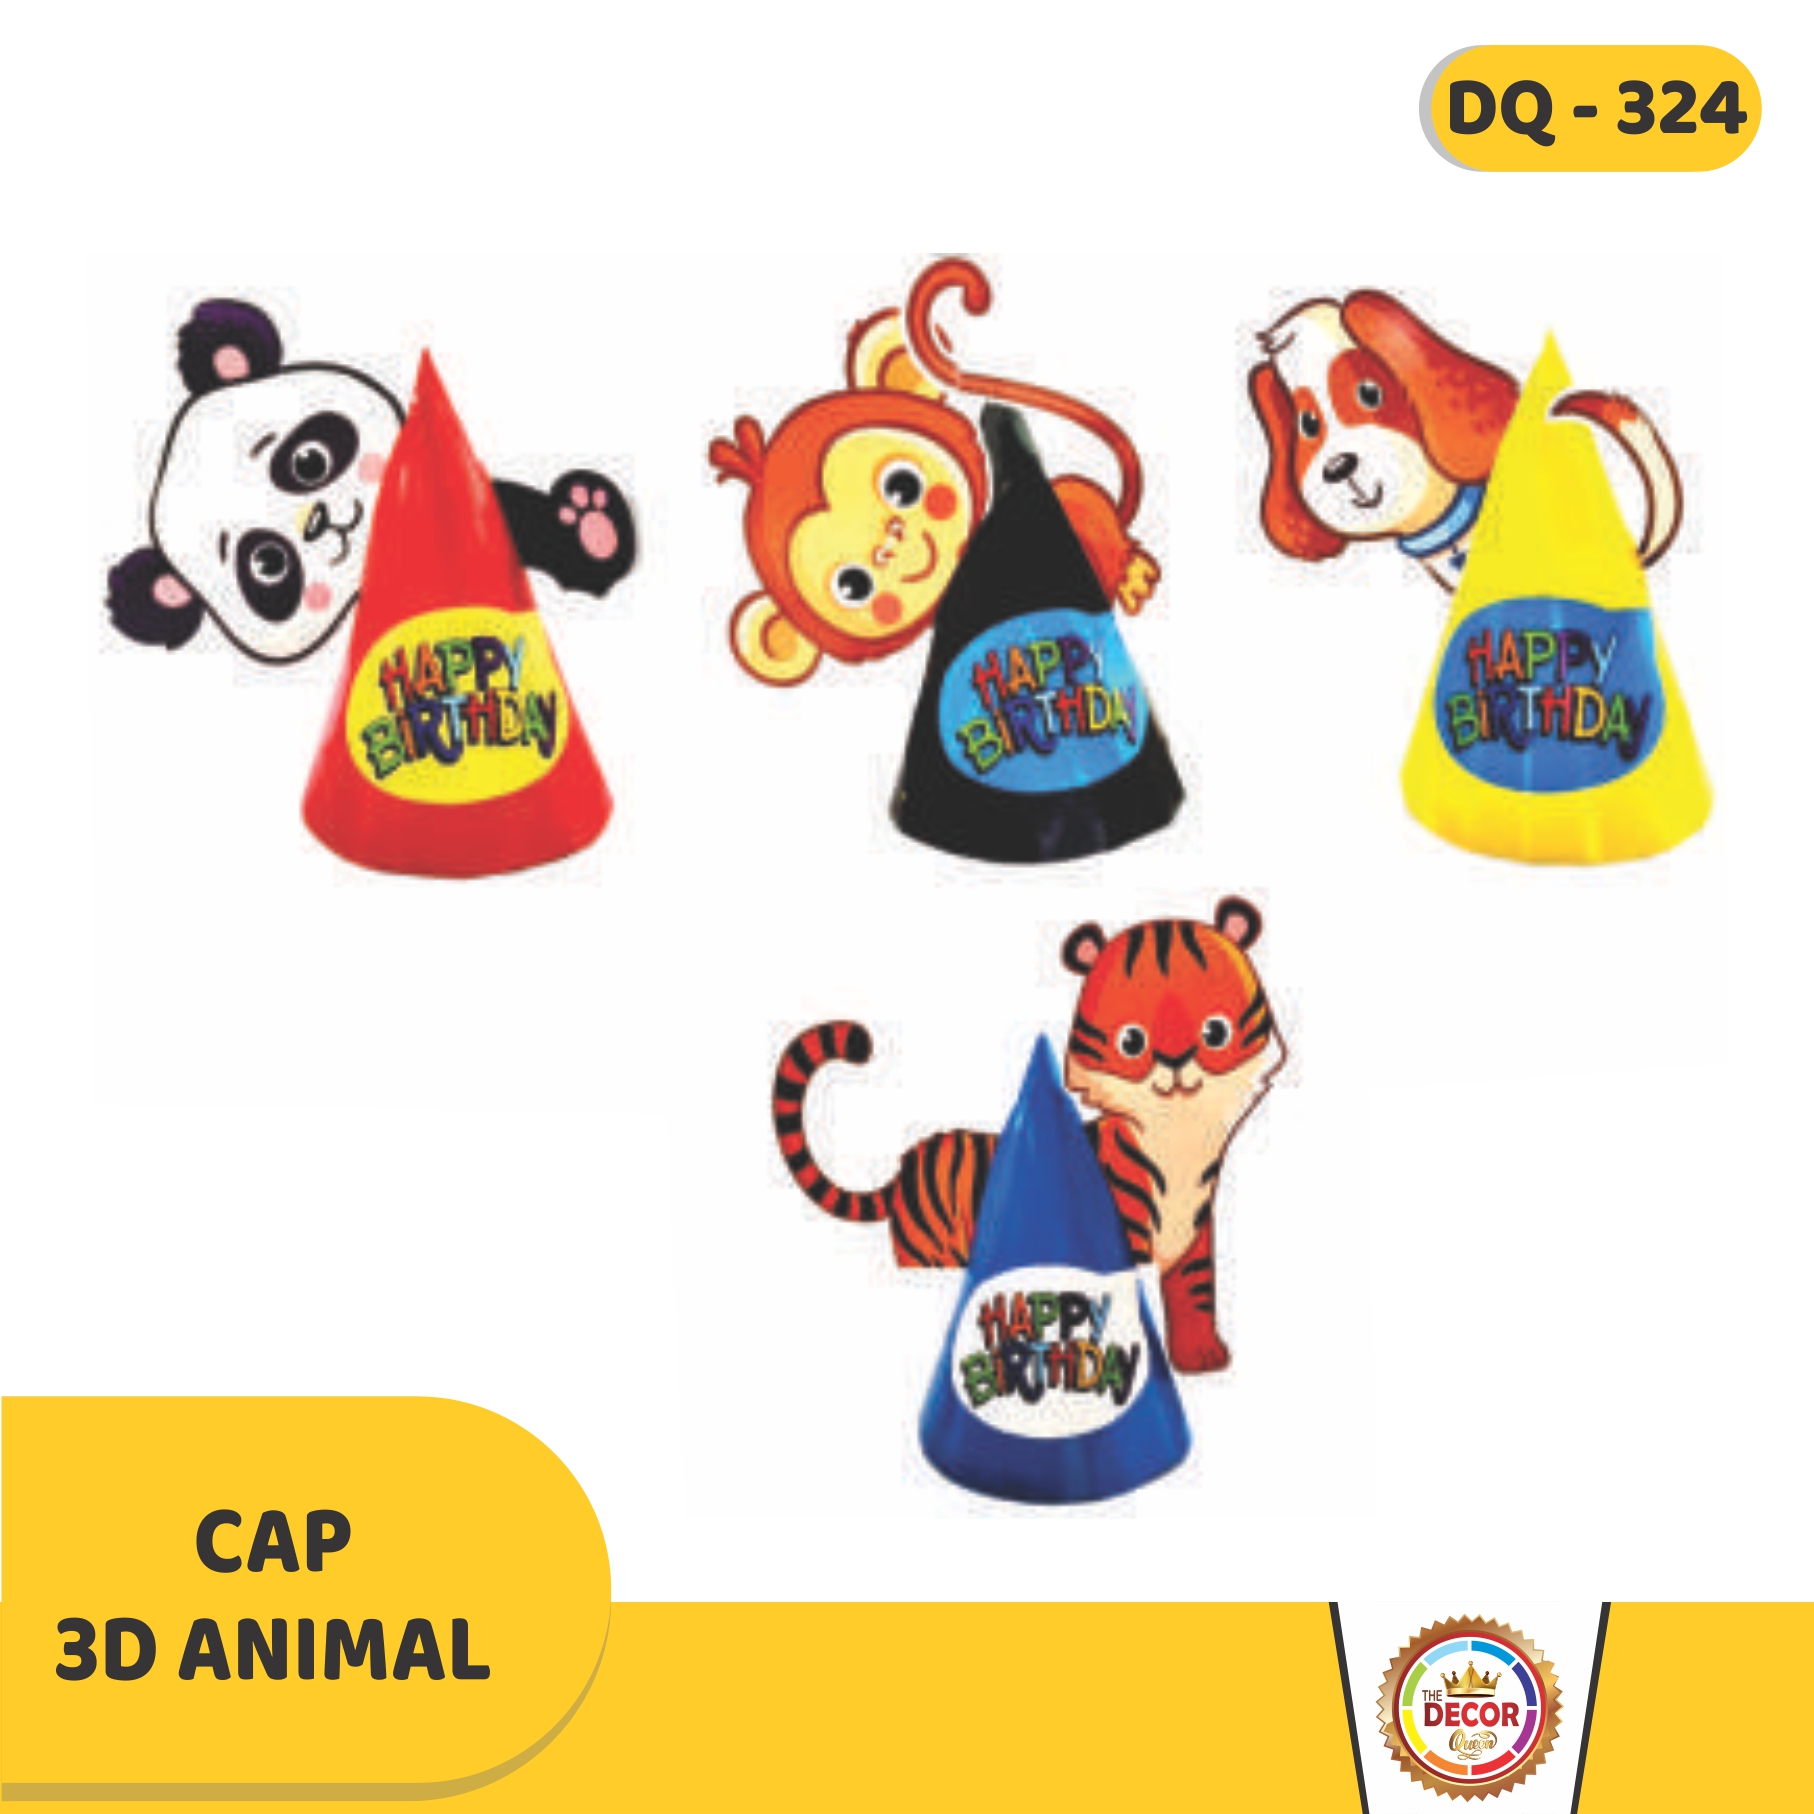 CAP 3D ANIMAL|Party Products|Cap